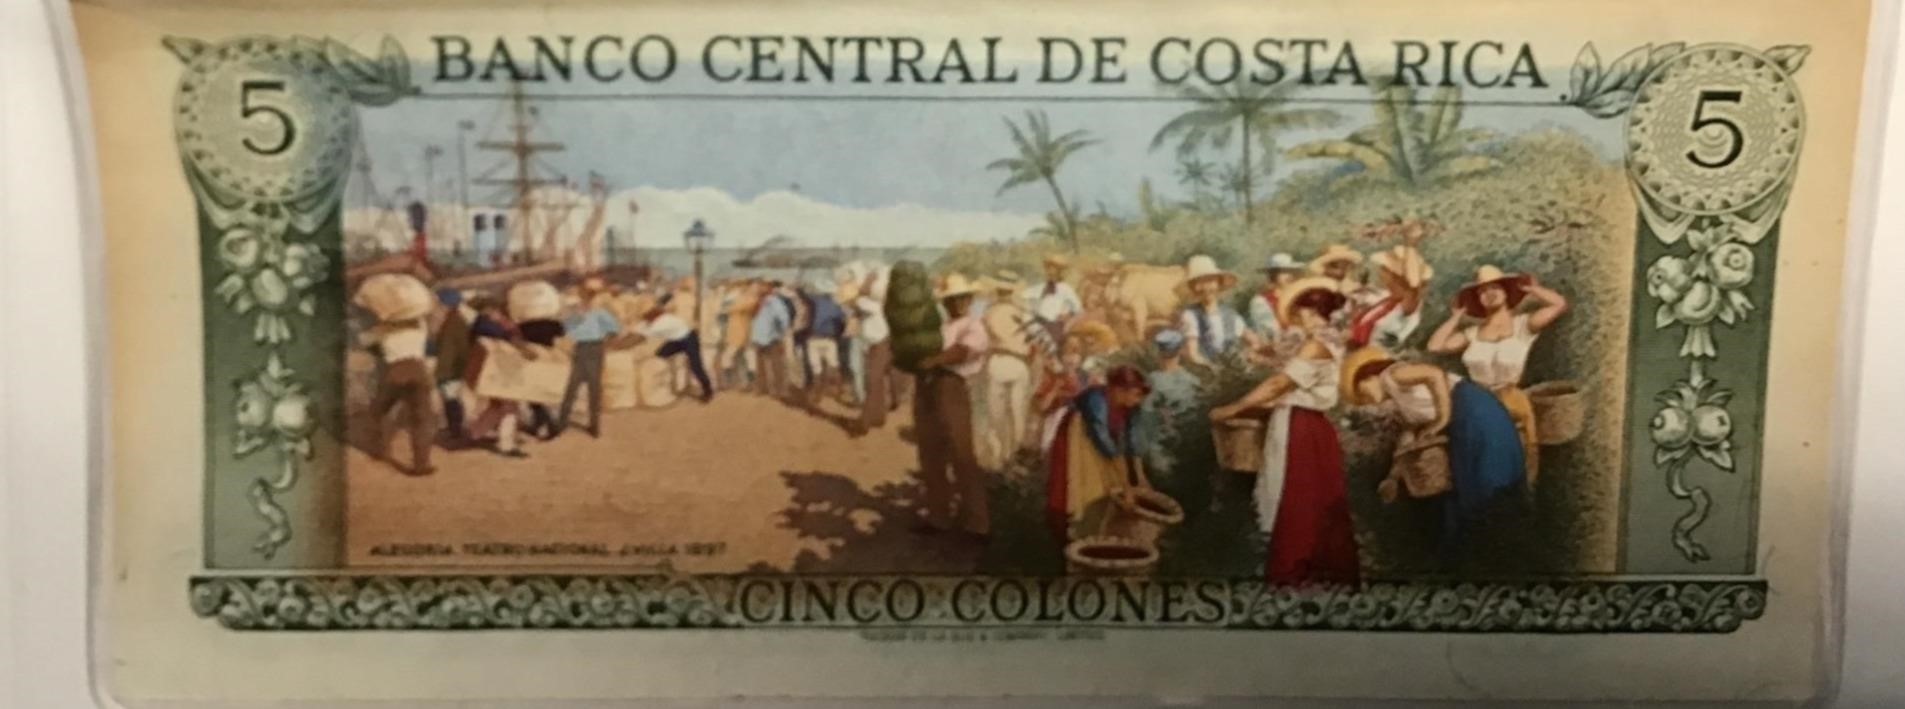 1989 COSTA RICA MONEY